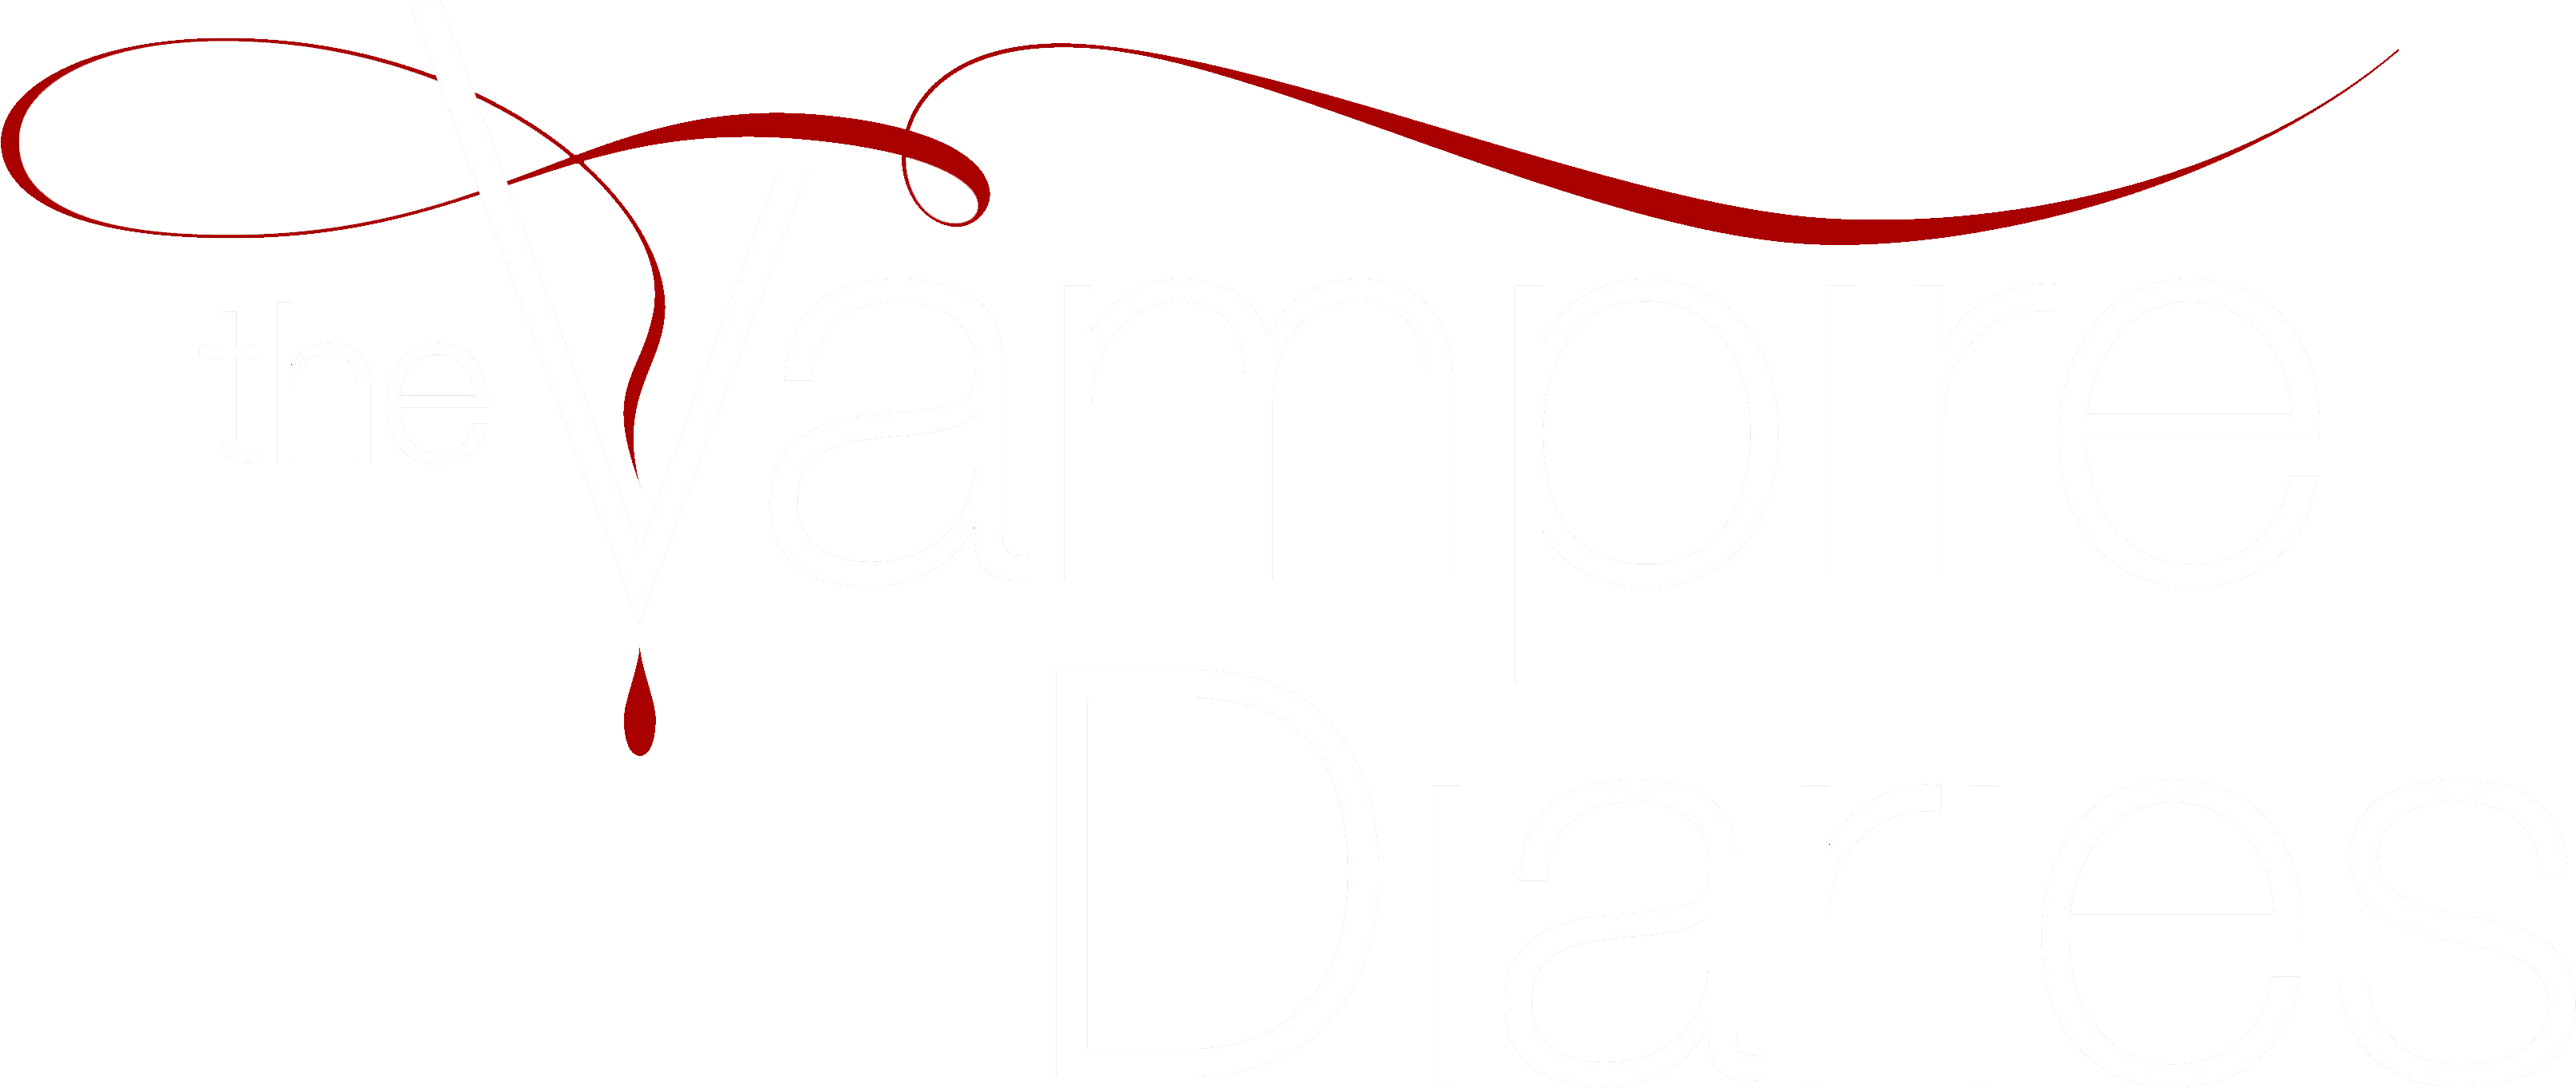 The Vampire Diaries logo